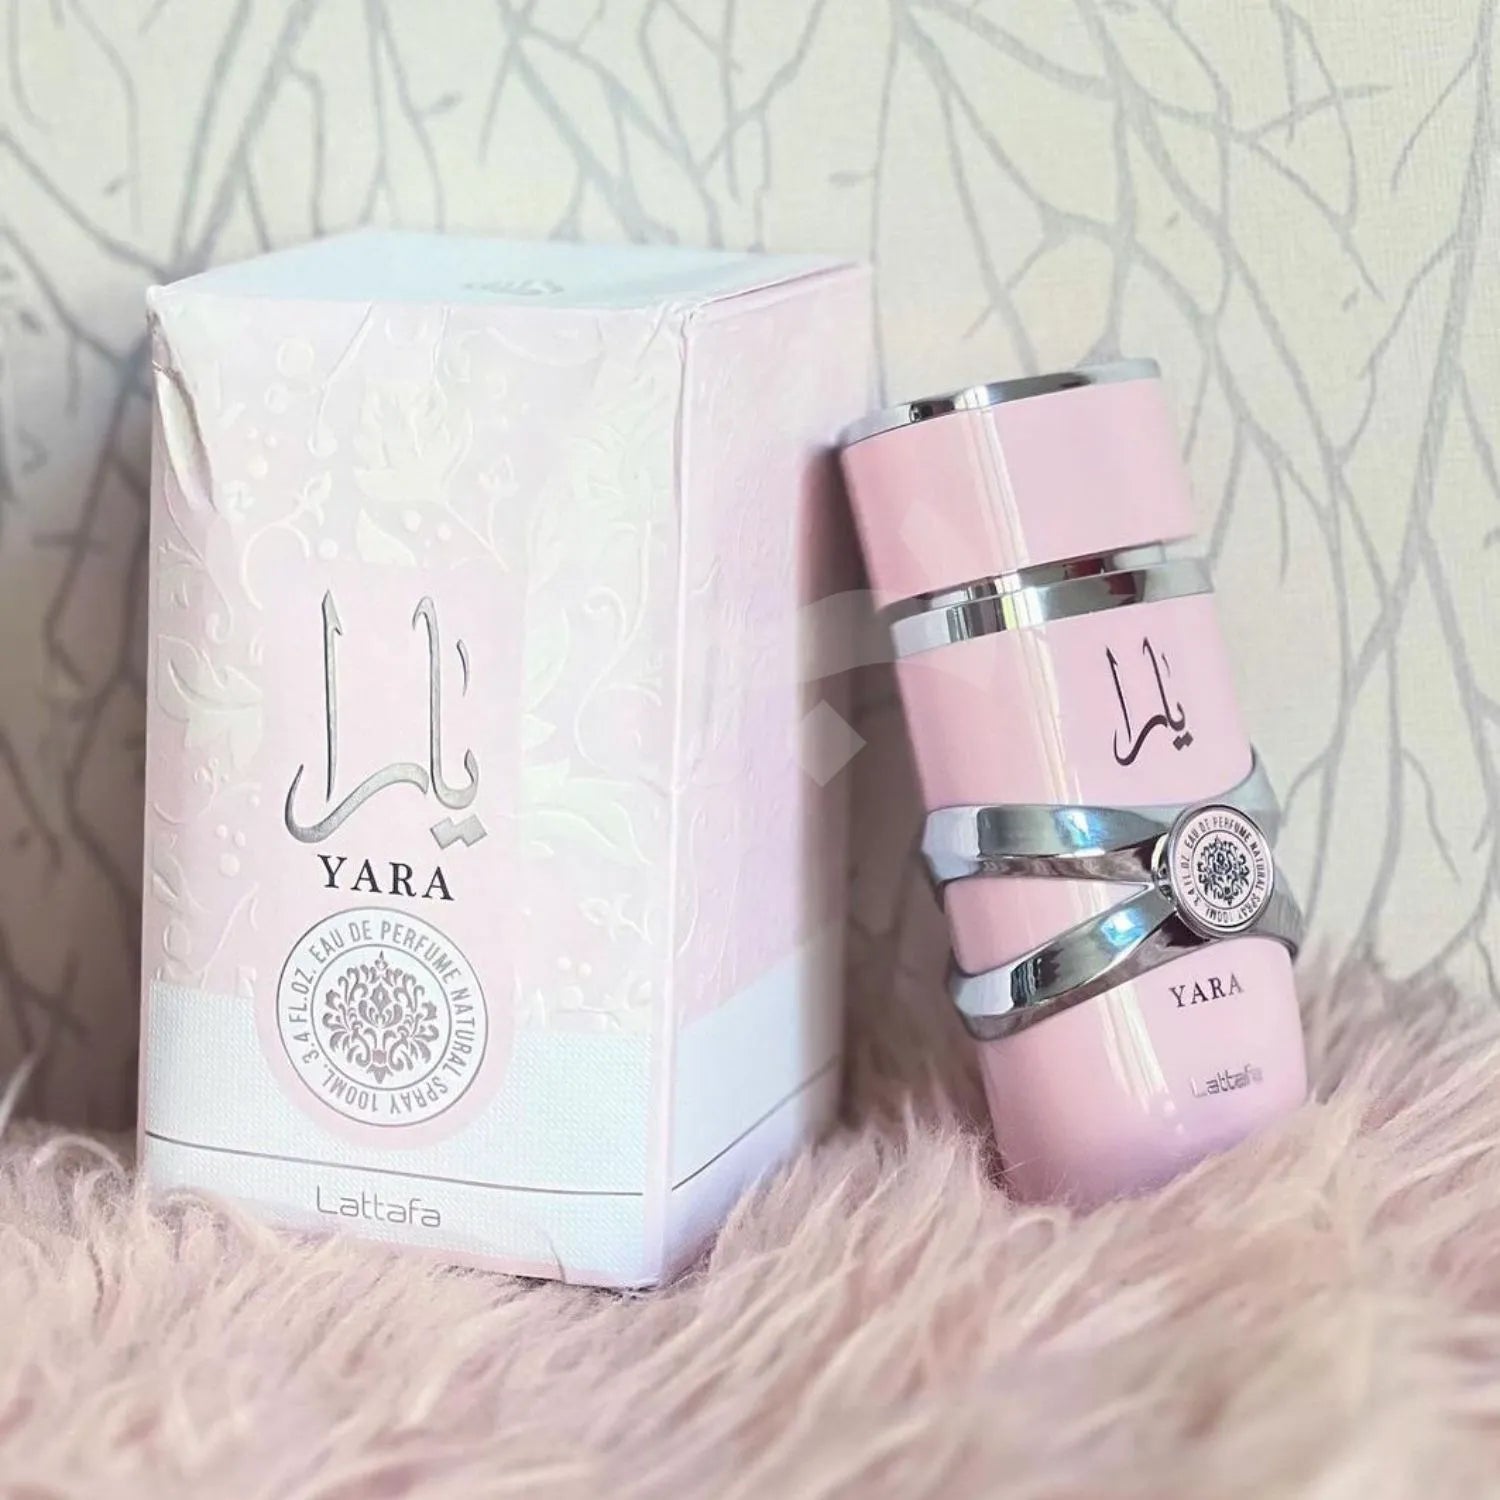 Lattafa Yara Perfume Box